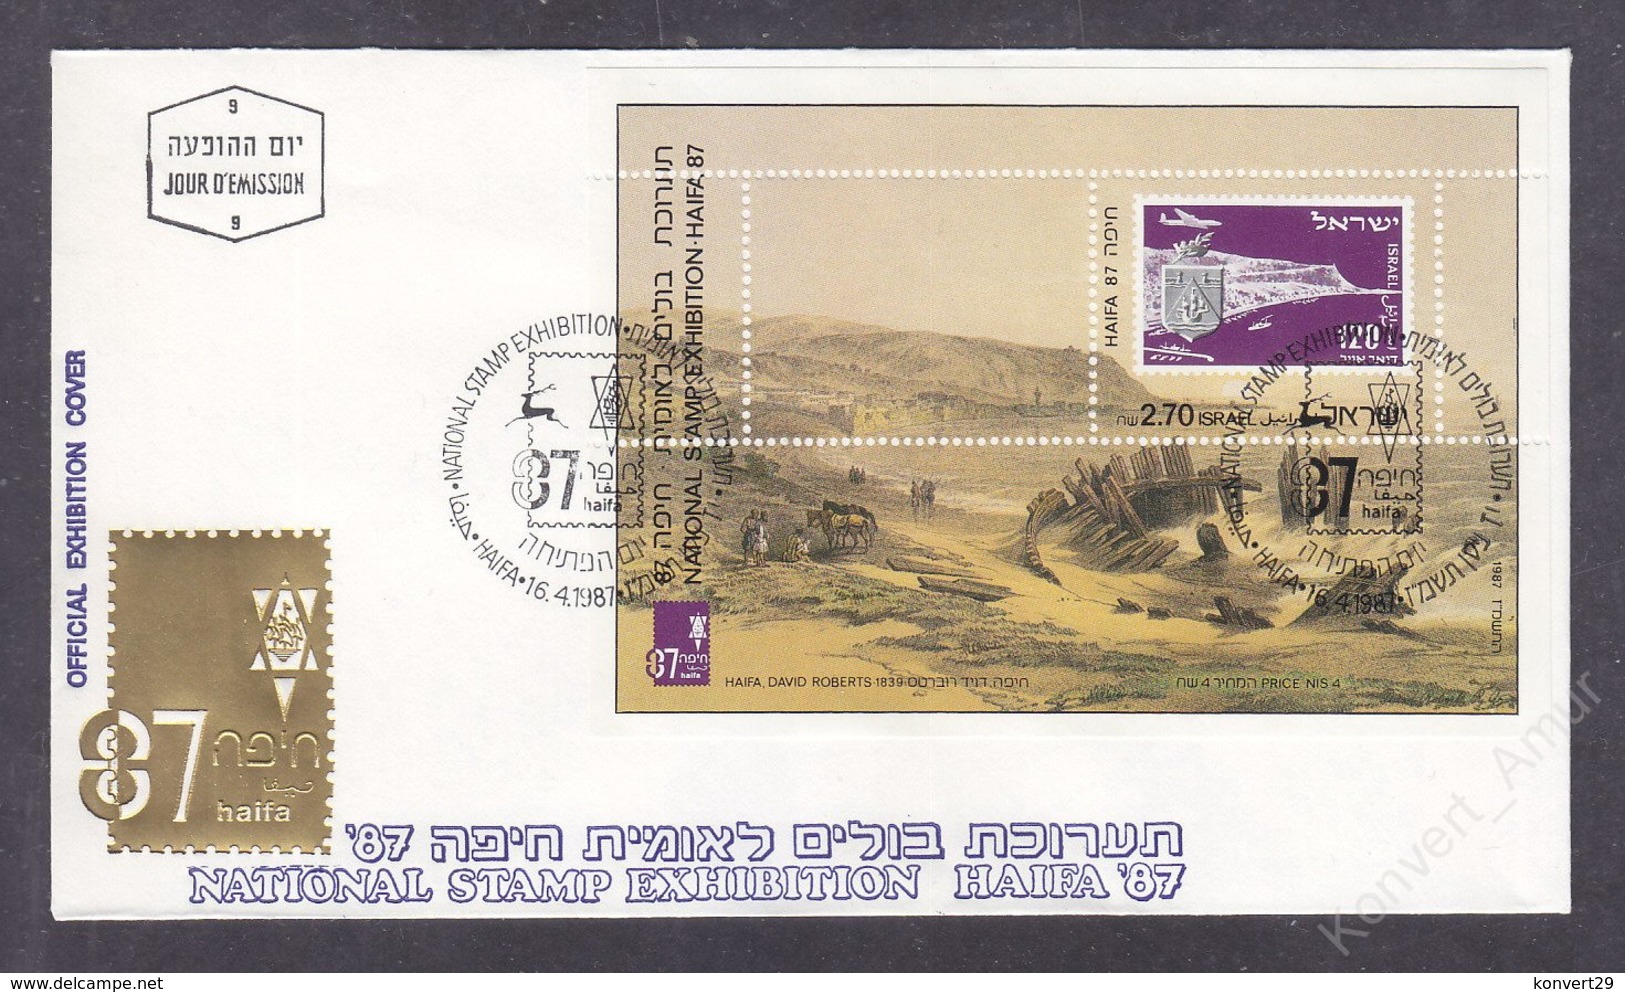 Israel 1987 National Stamp Exhibition, Haifa 87 FDC - FDC